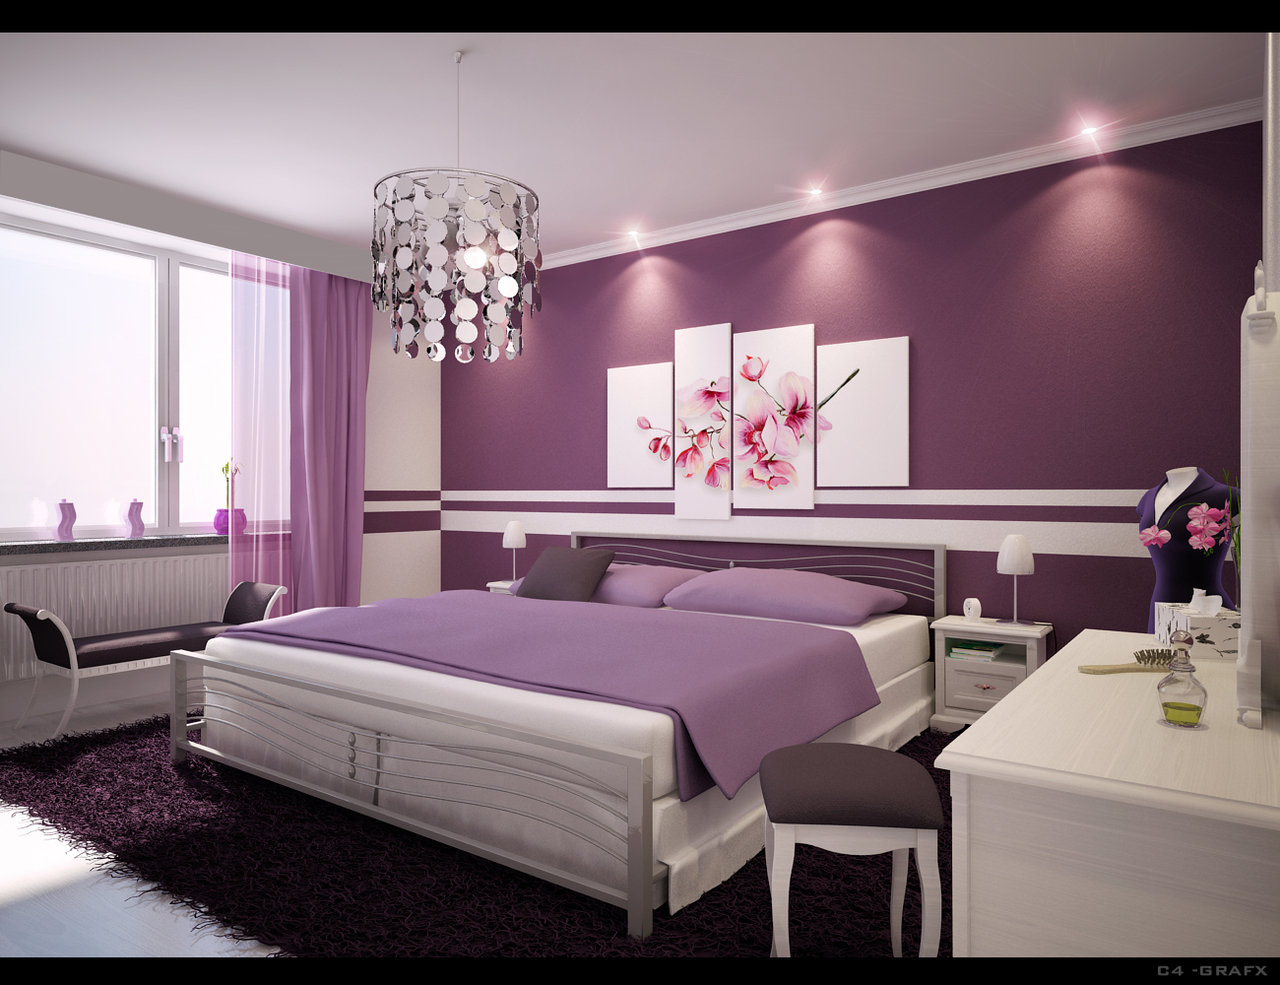 Interior Design For Apartment Bedroom